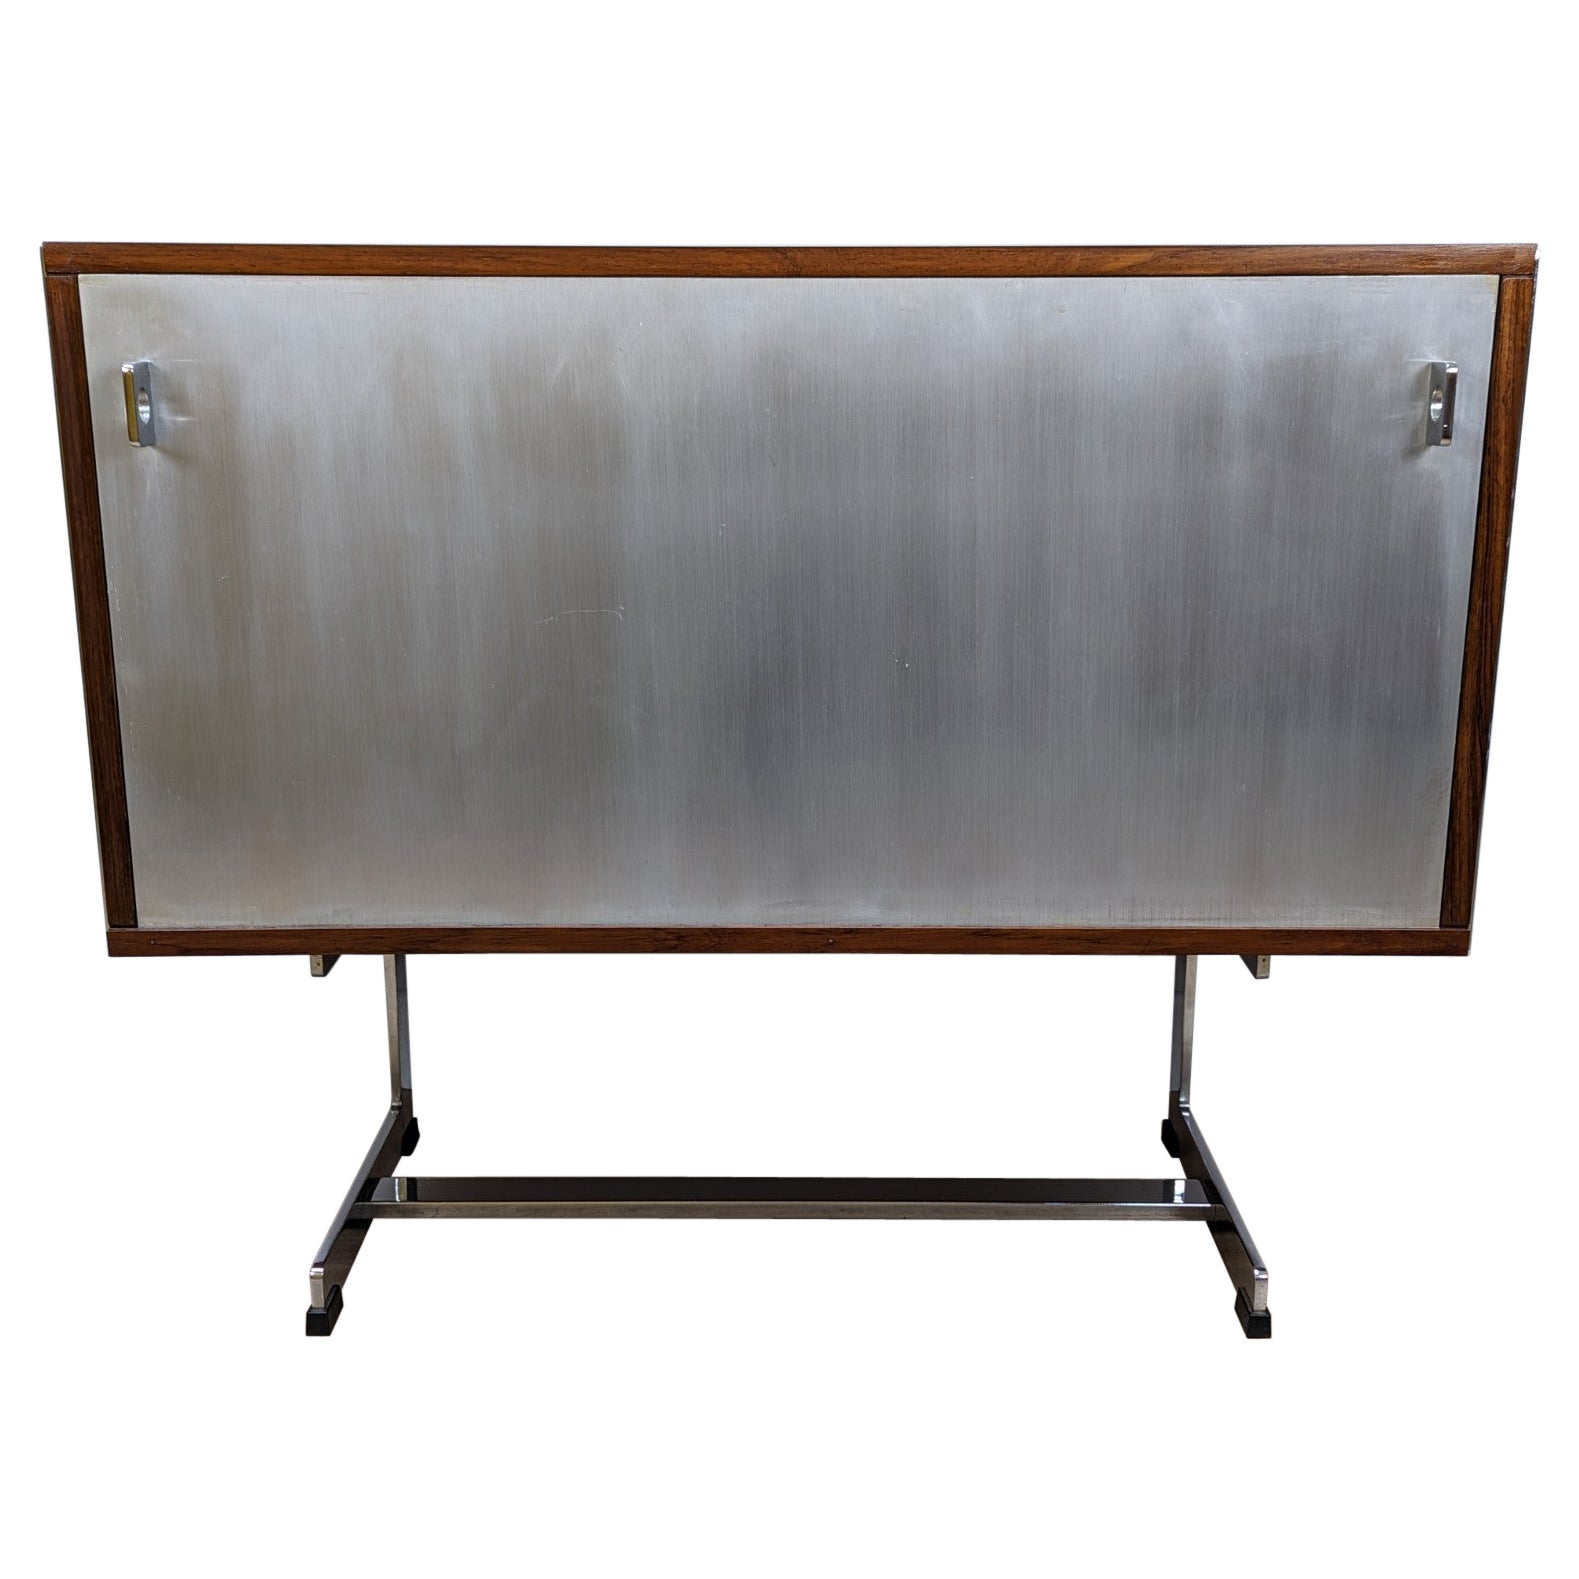 Merrow Associates Rosewood Credenza / Sideboard with Aluminium Front